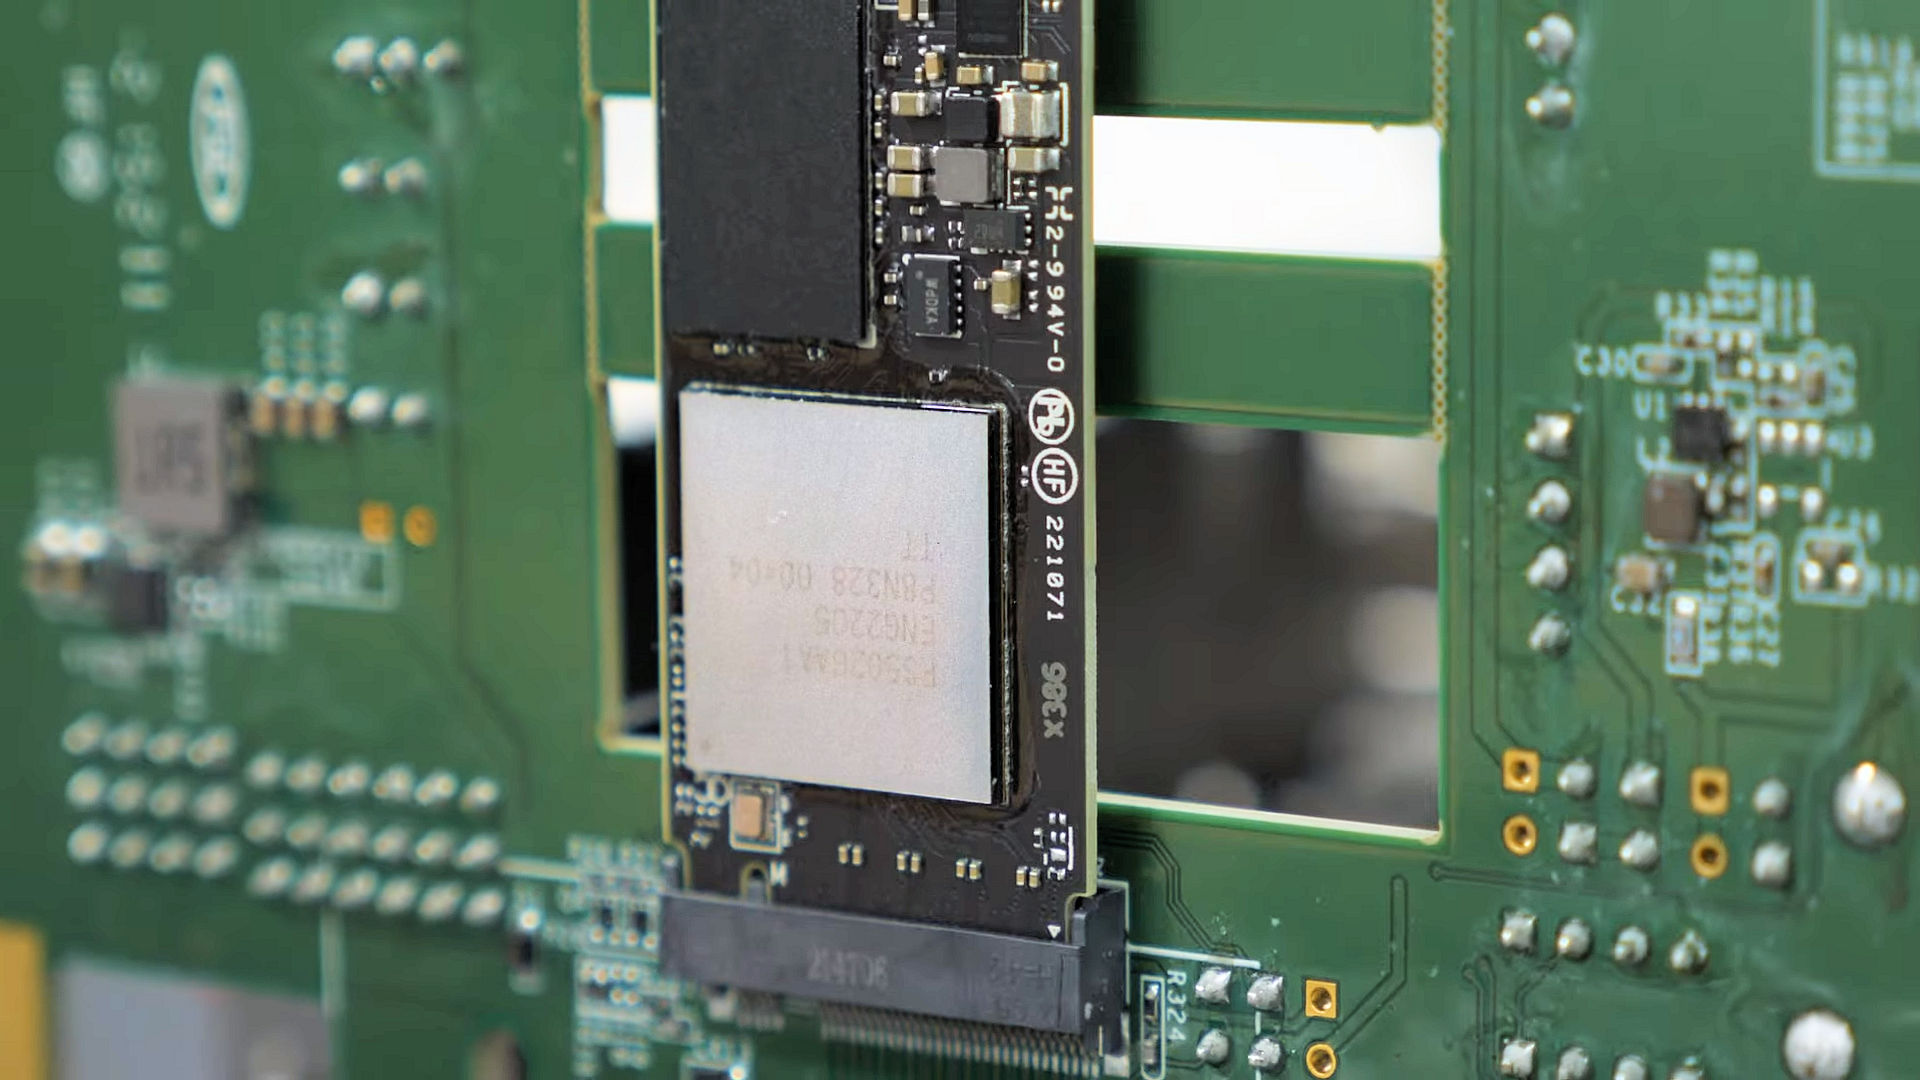 phison gen5 ssd demo 1 แรงสุดๆ!! Phison demos Gen5 SSD ทดสอบบนเมนบอร์ด AMD X670 ที่รองรับ PCIe 5.0 กับประสิทธิภาพการอ่านที่ 12.5GB/s และเขียนที่ 10GB/s 